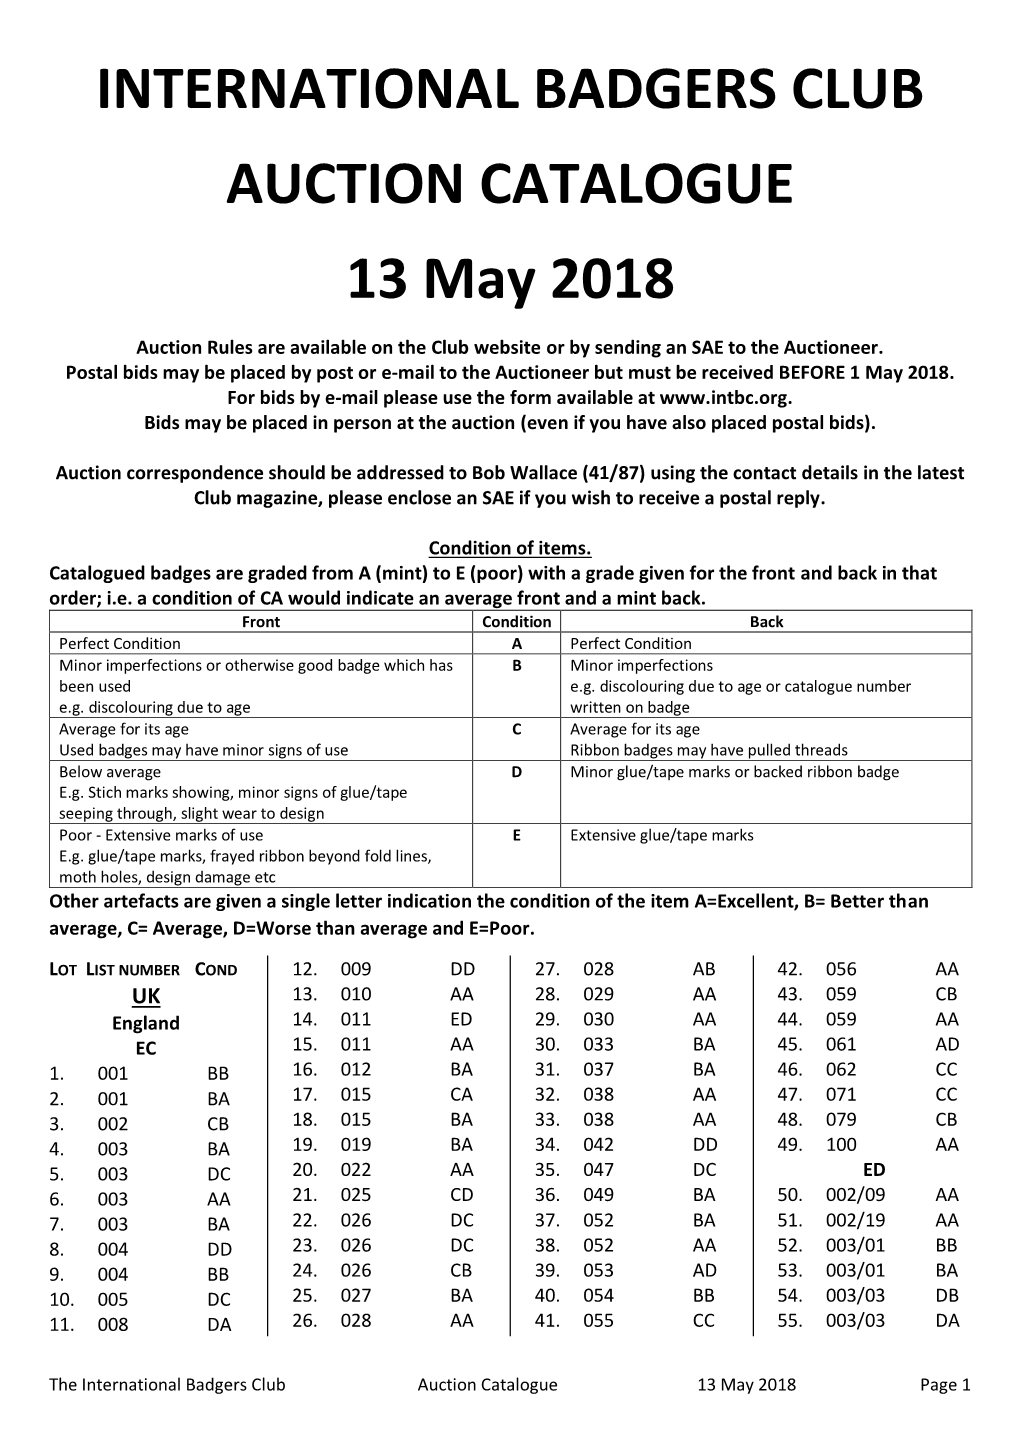 Auction Catalogue, May 2018